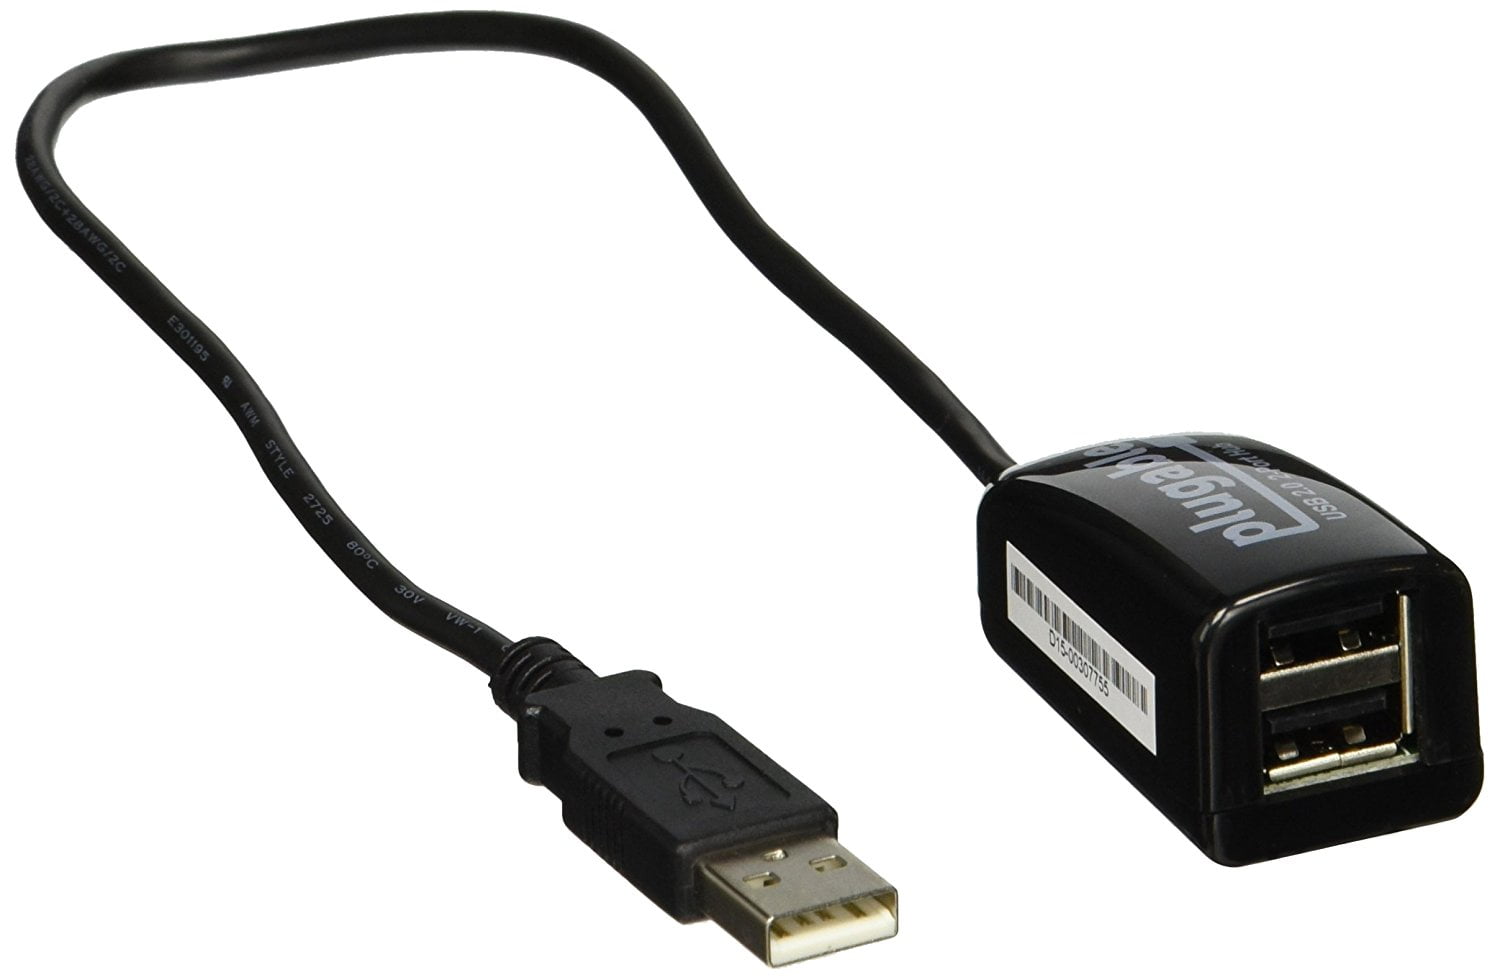 Usb technologies. USB 2.0 (480 Mbit/sec). USB 2.0 Hi-Speed. USB 2.0 хаб встраиваемый в автомобиль. Hi-Speed USB 2.0 shialded.